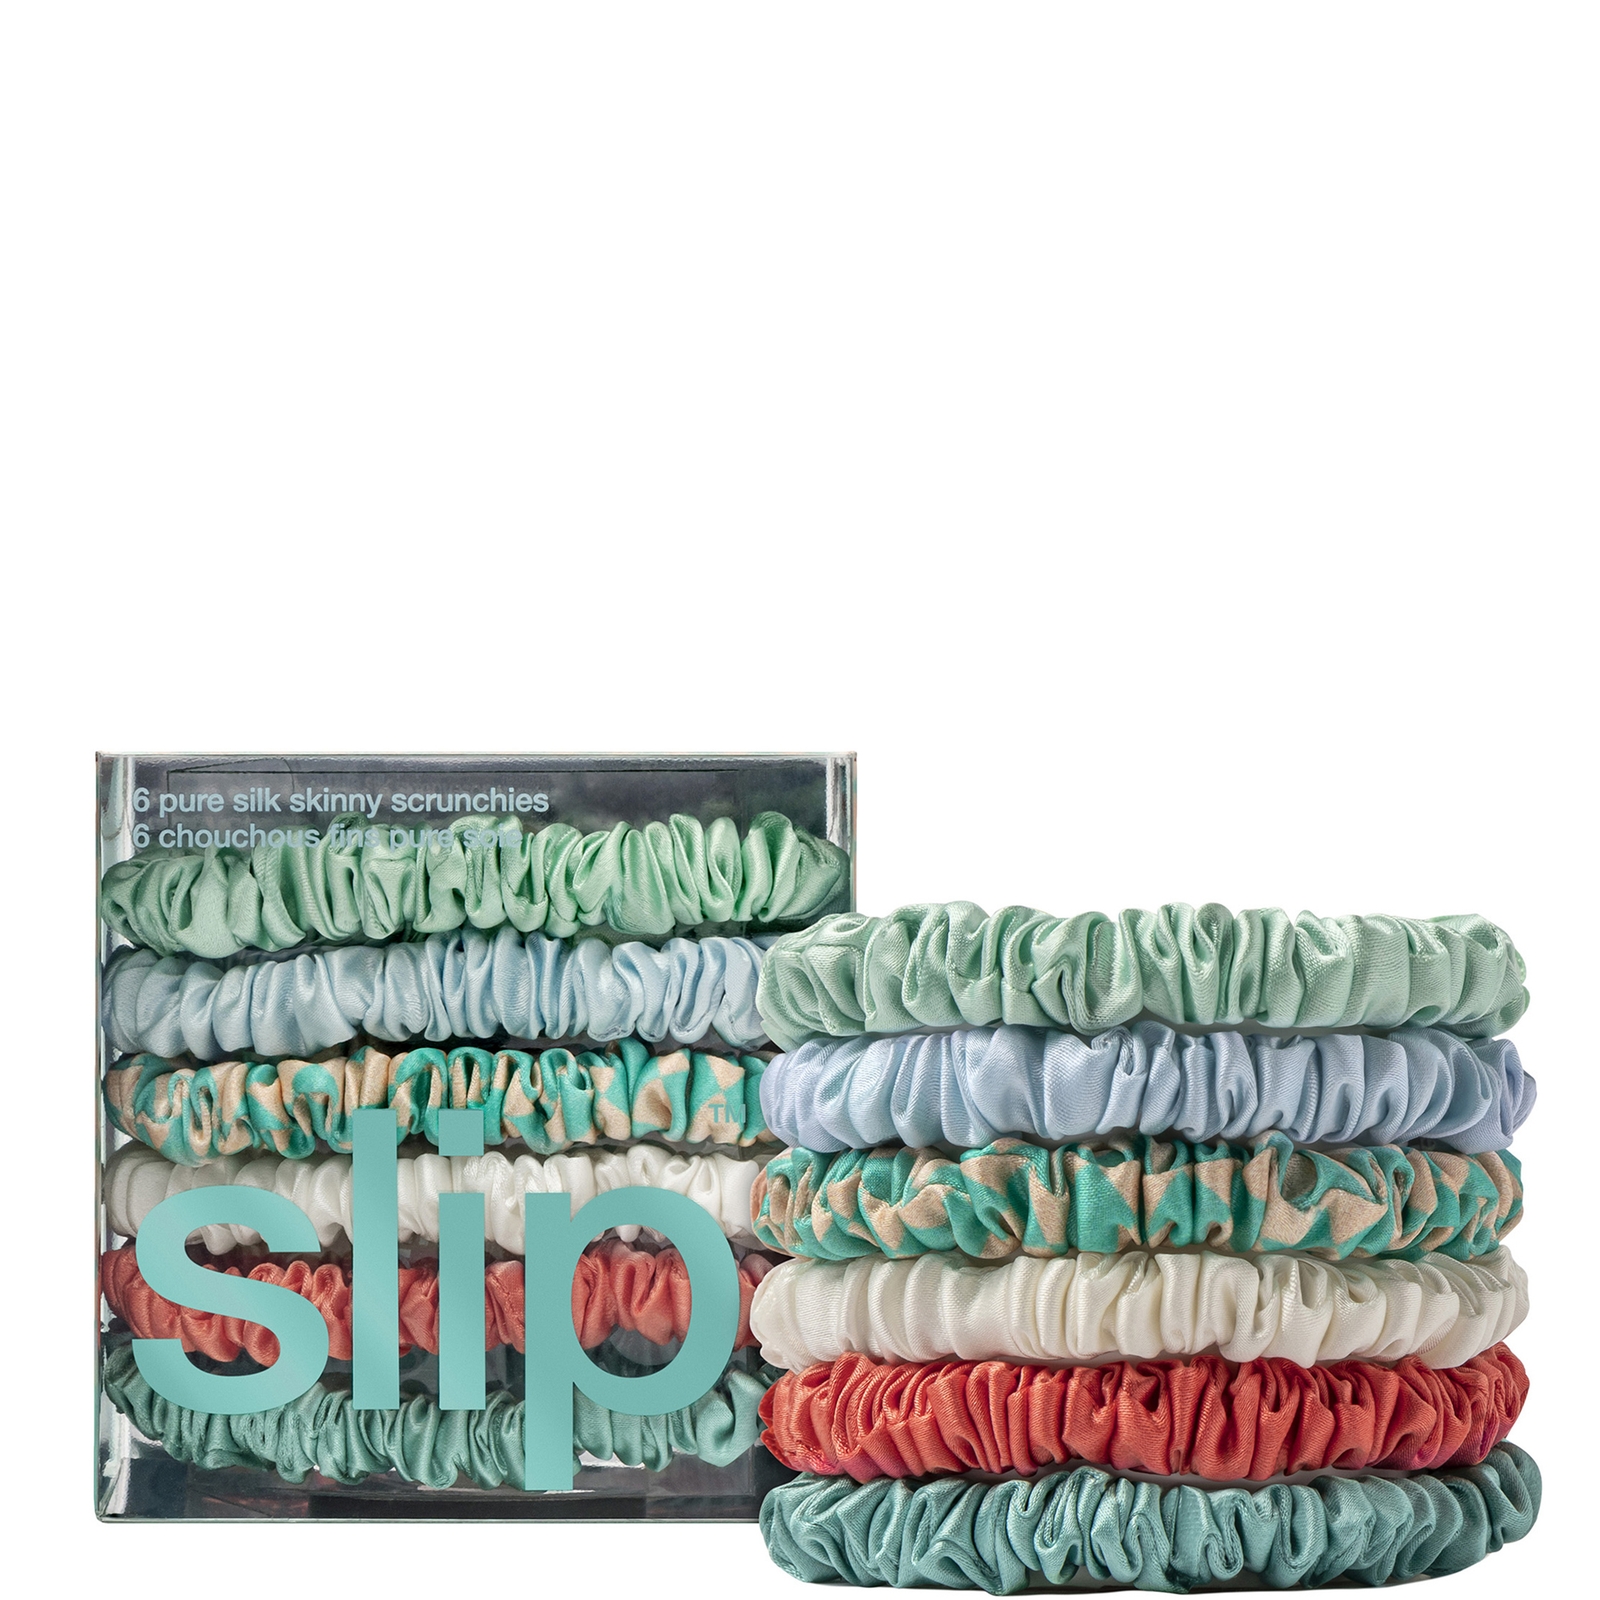 Image of Slip Pure Silk Skinny Scrunchies - Seabreeze